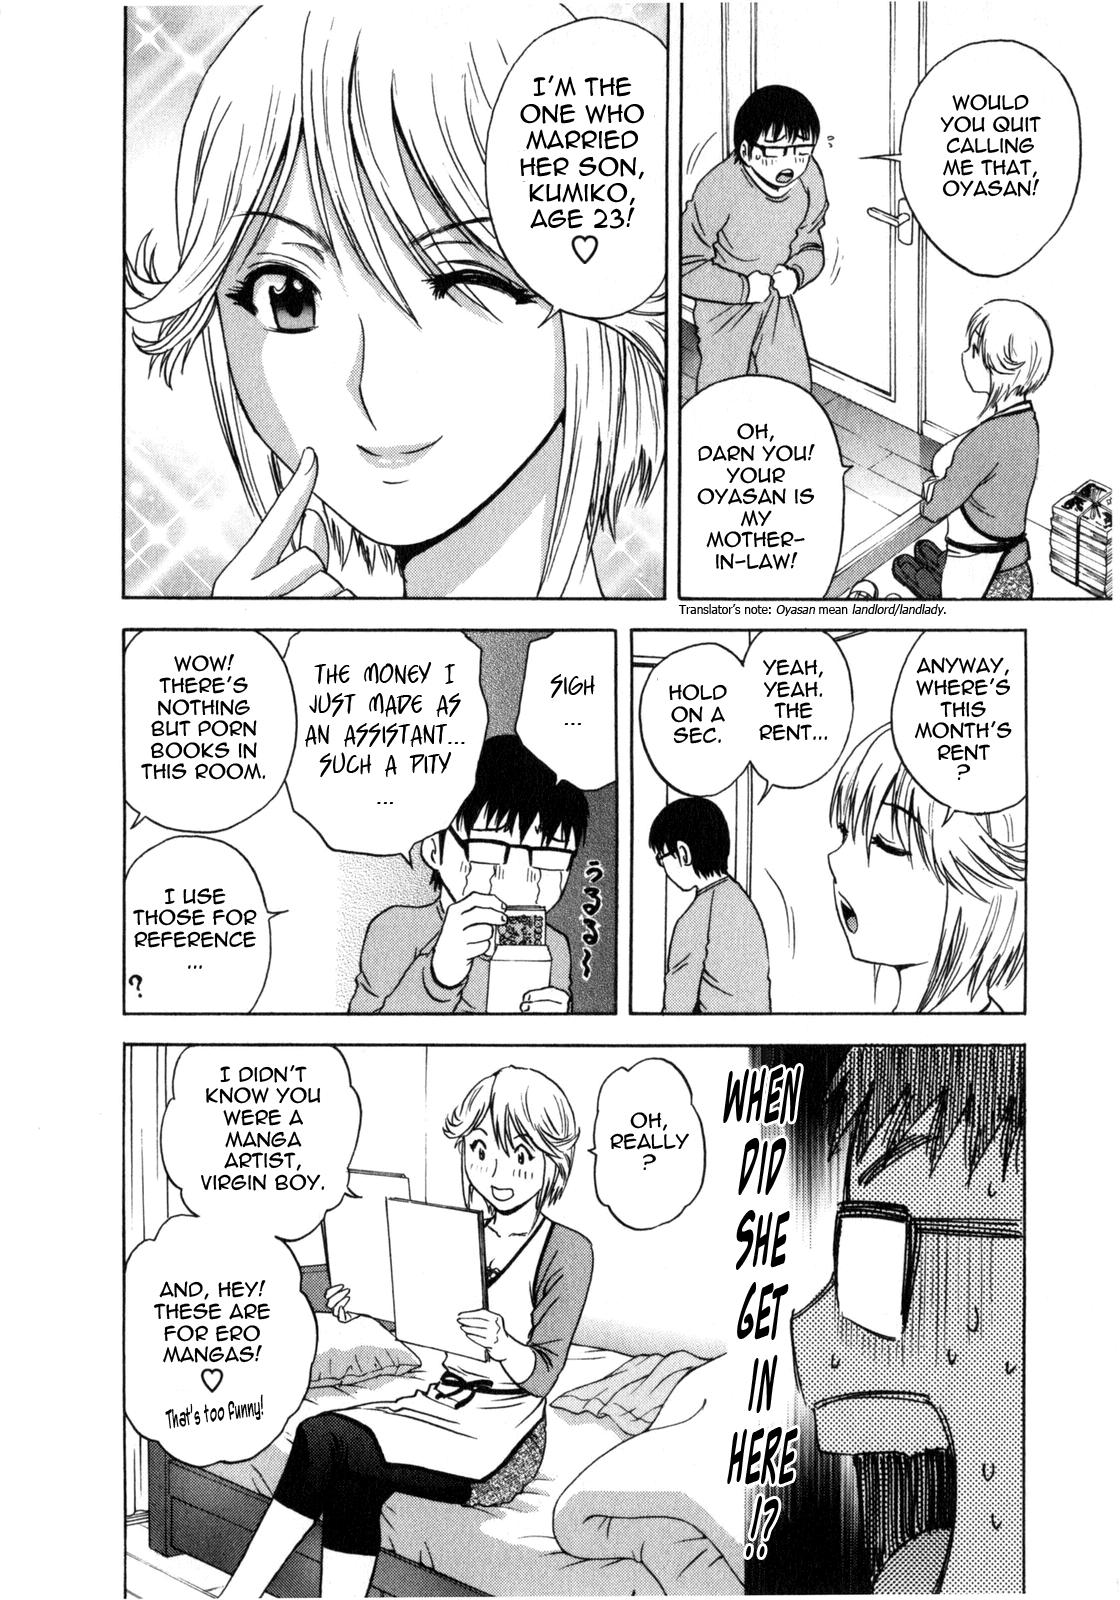 [Hidemaru] Life with Married Women Just Like a Manga 1 - Ch. 1-5 [English] {Tadanohito} 29